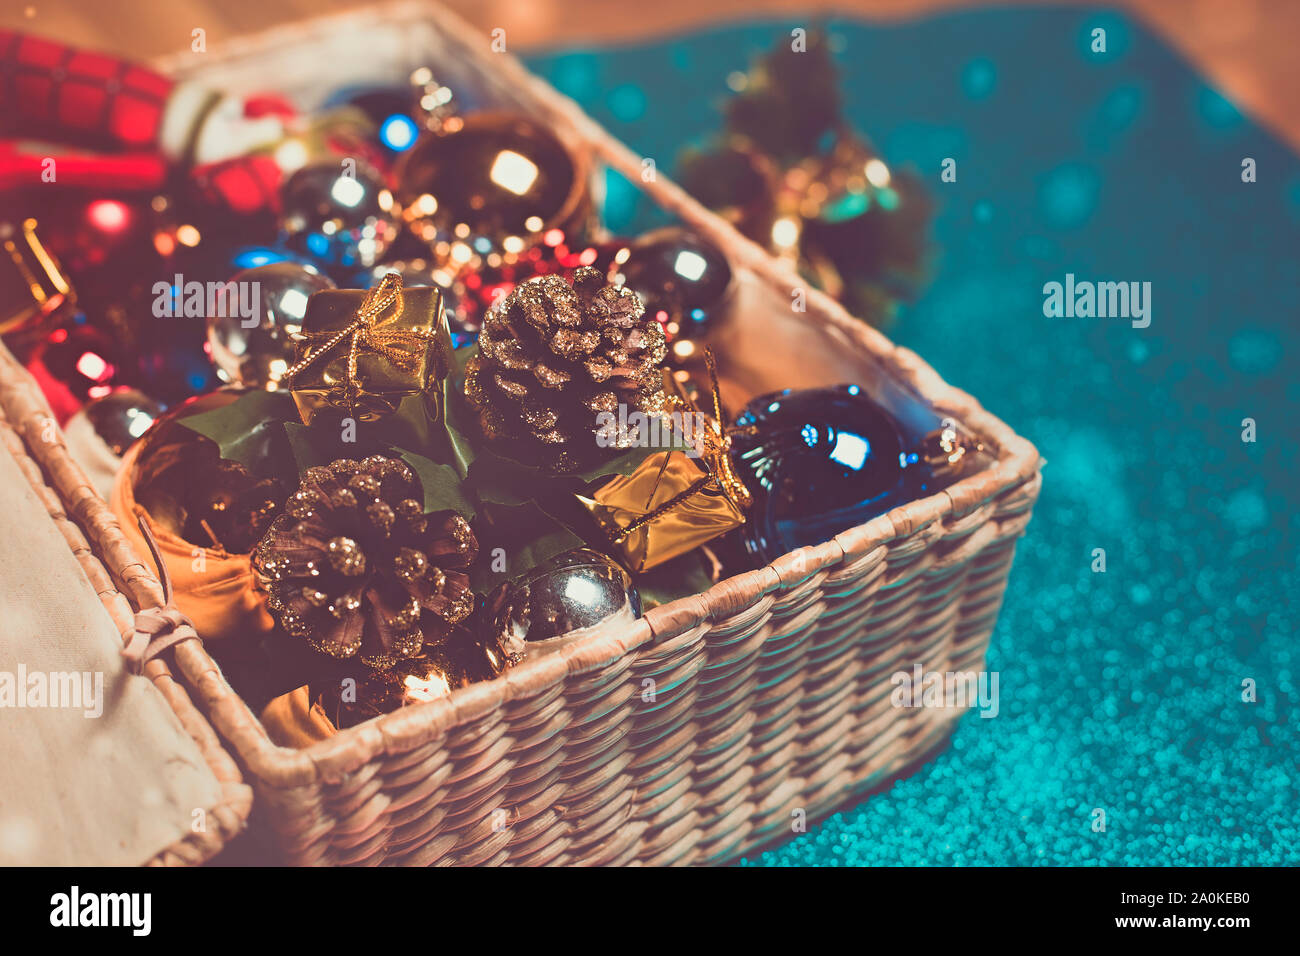 wicker box on a shiny floor full of Christmas decorations Stock Photo